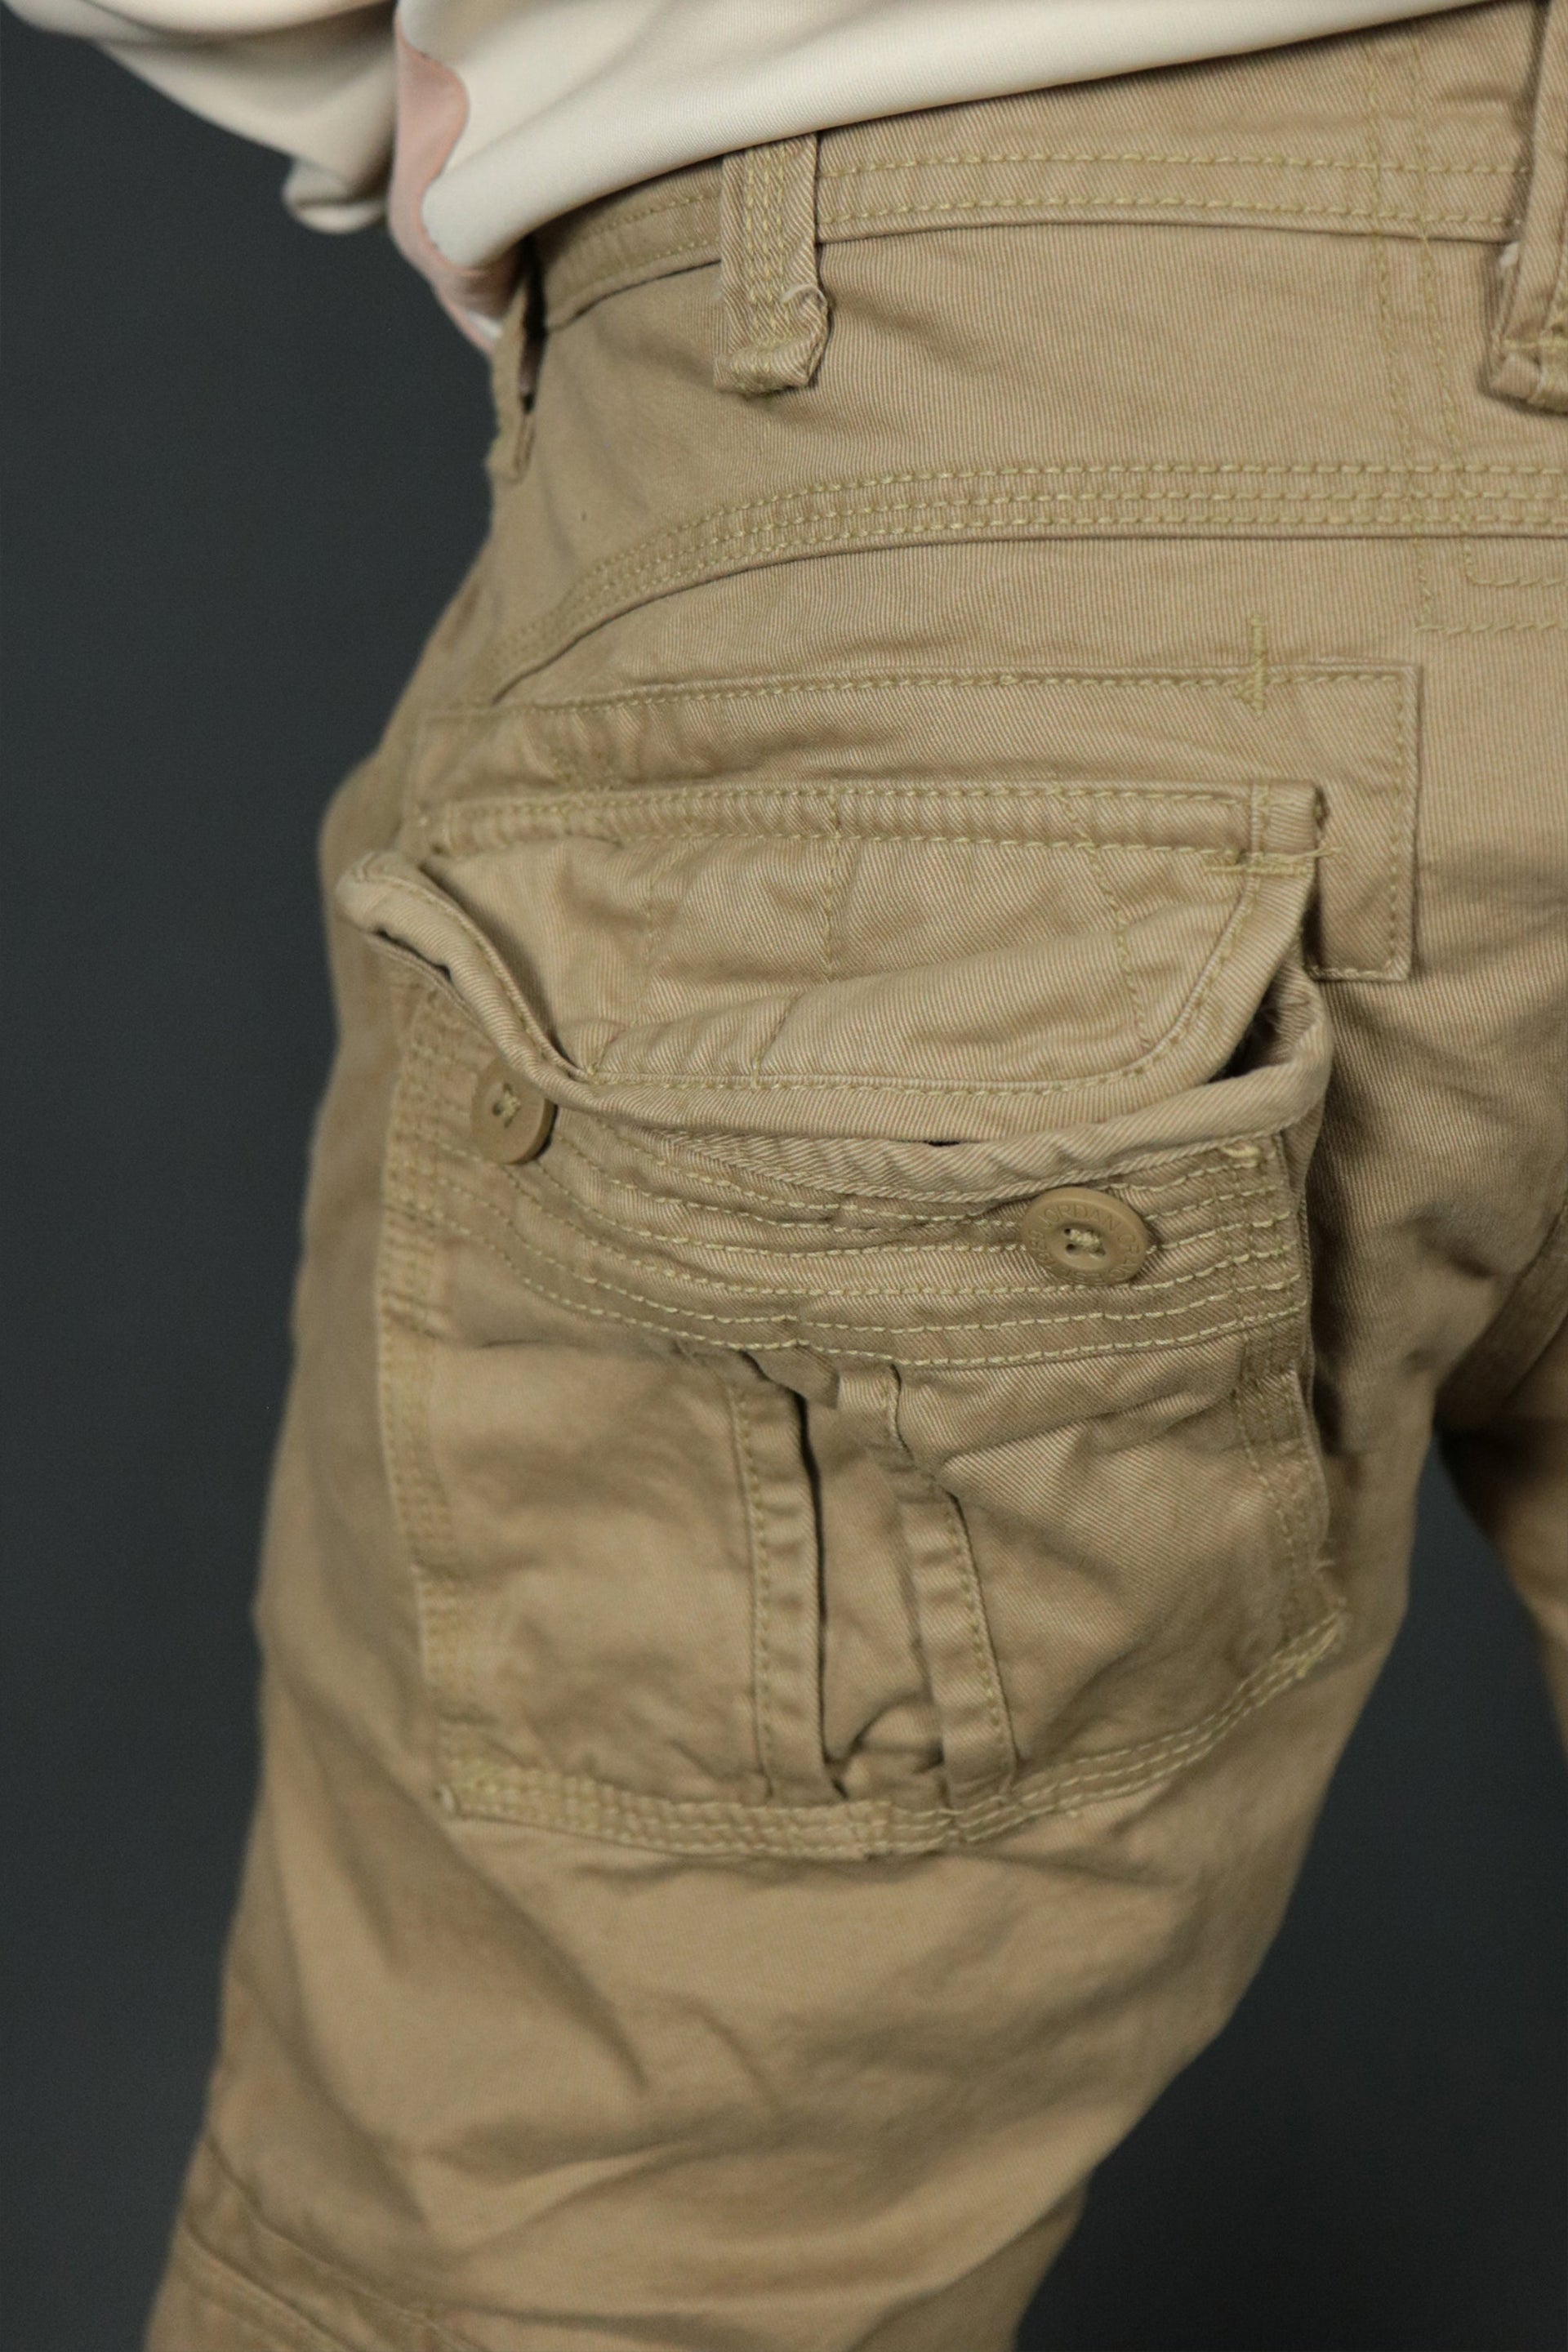 The back pocket of the khaki Jordan Craig cargo pants.